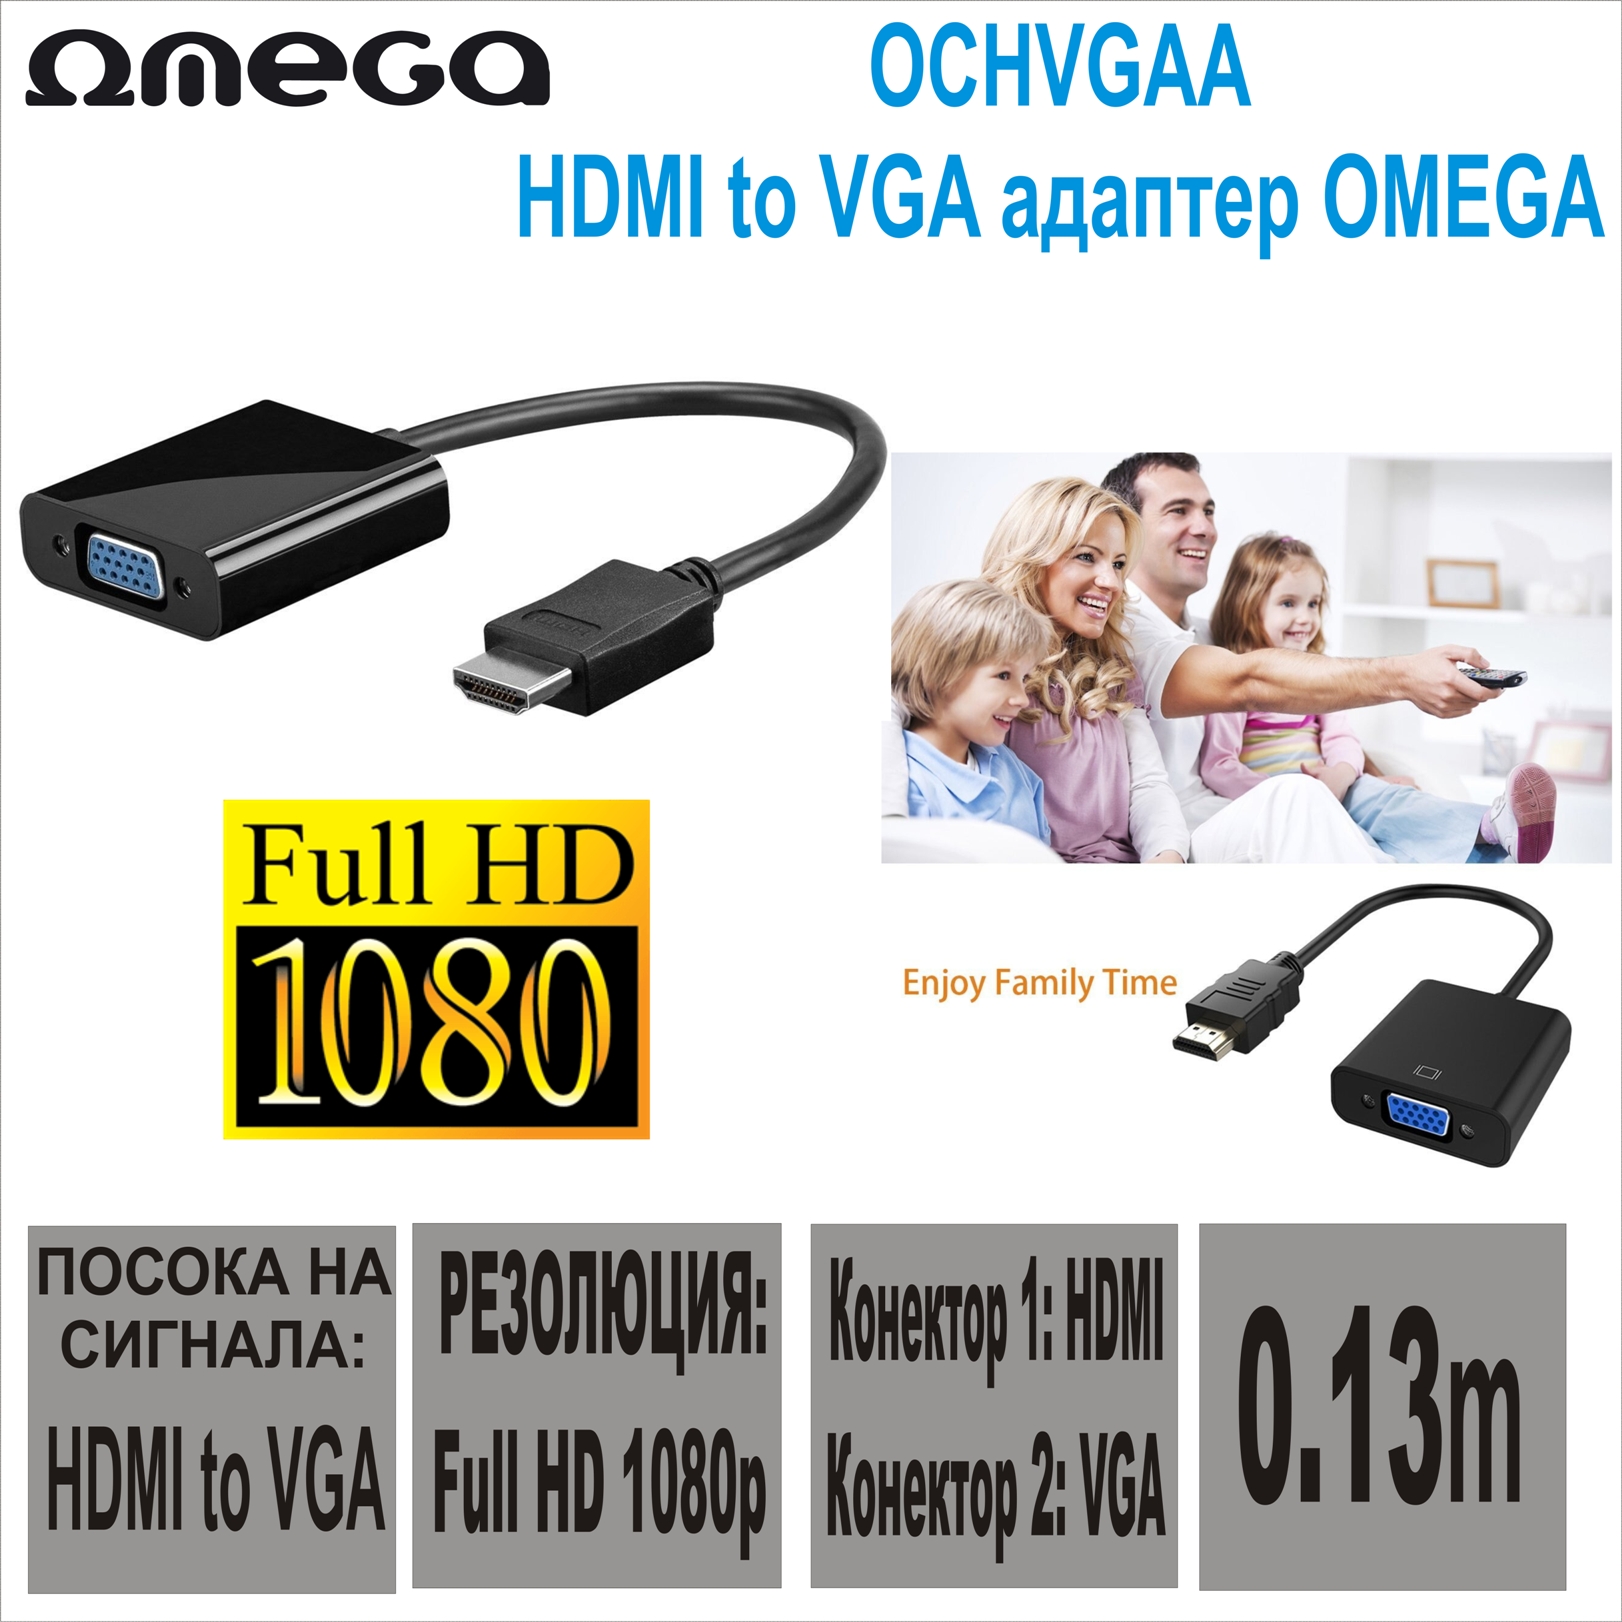 HDMI to VGA адаптер OMEGA OCHVGAA